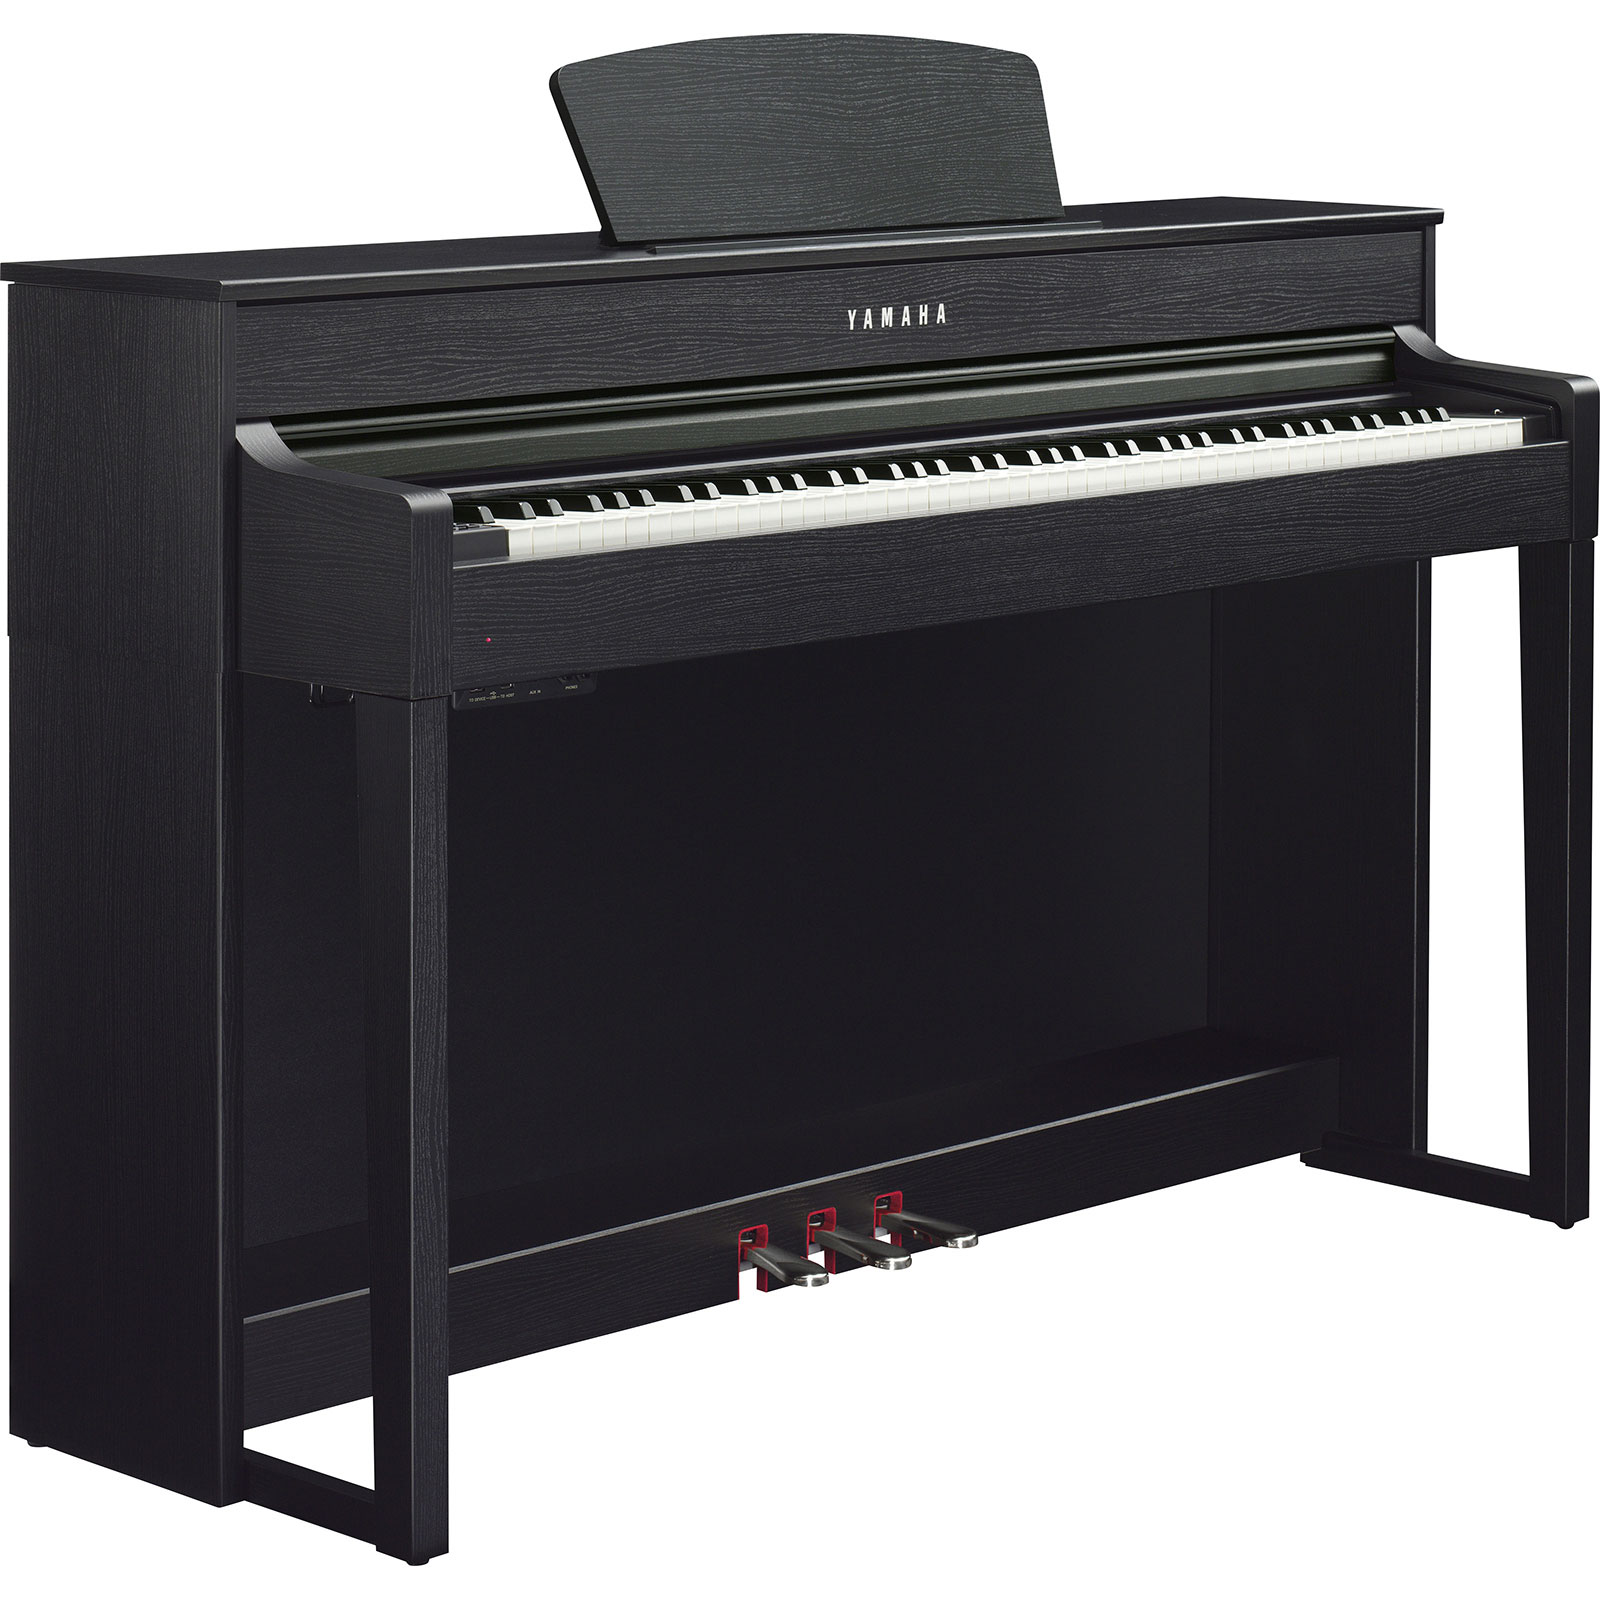 Yamaha CLP-535 digital piano